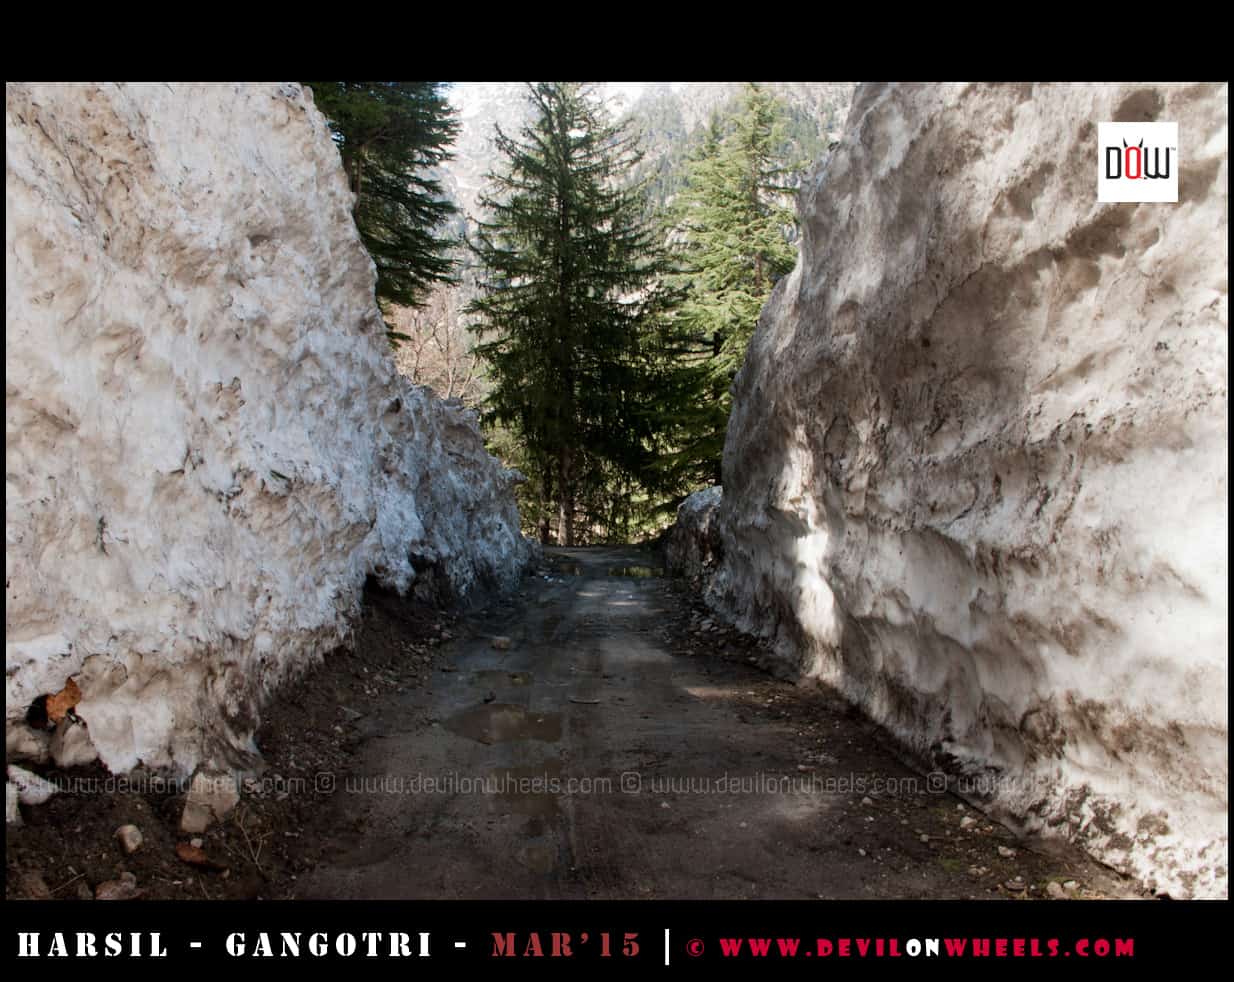 The High Snow Walls near Dharali